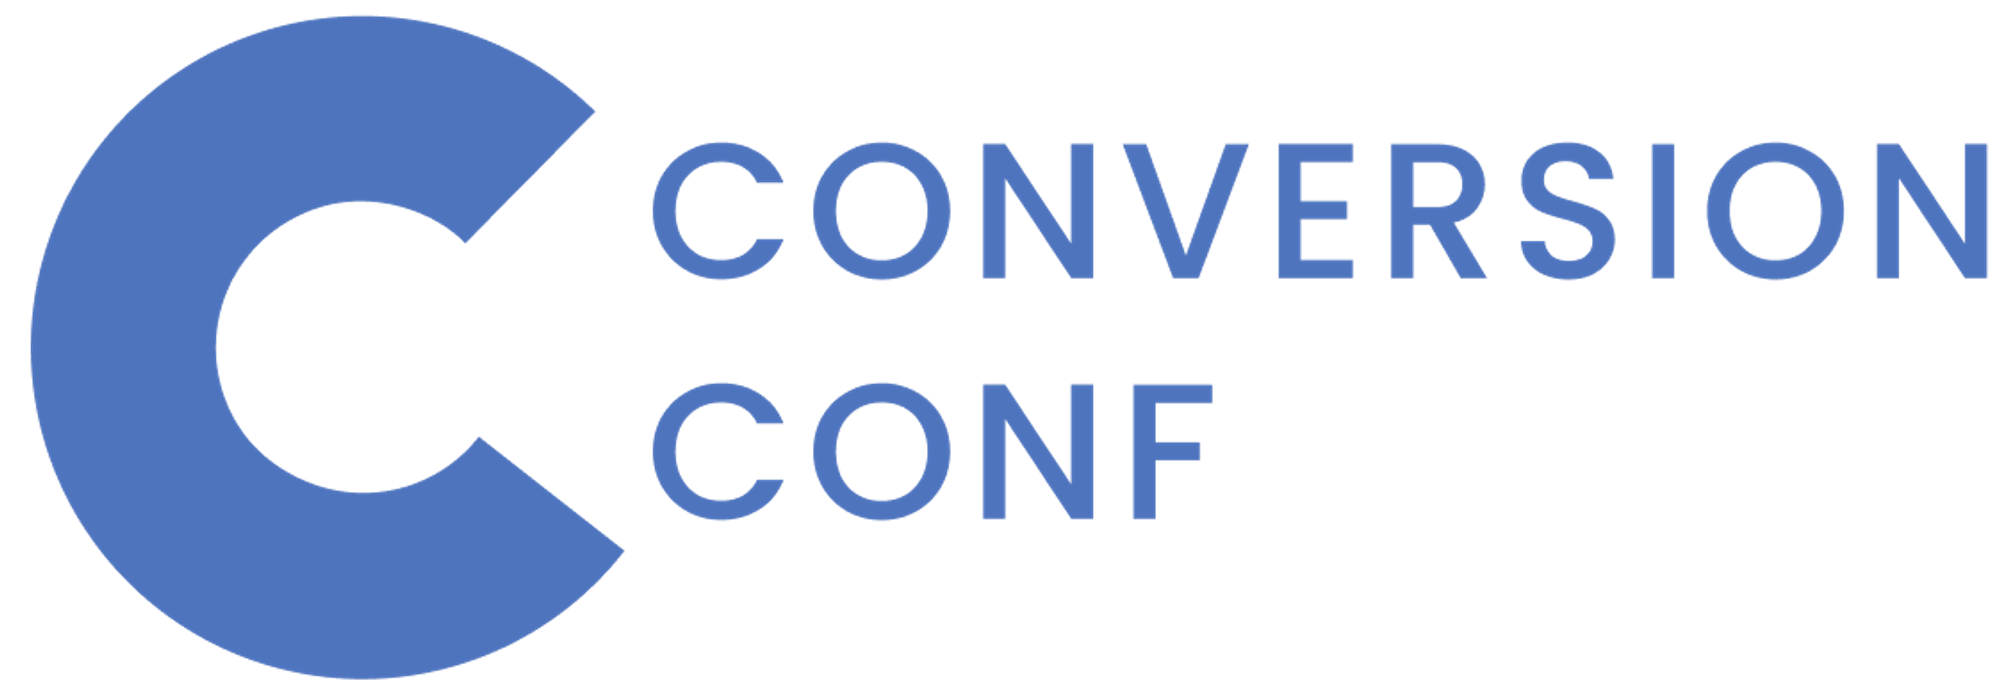 events-logo